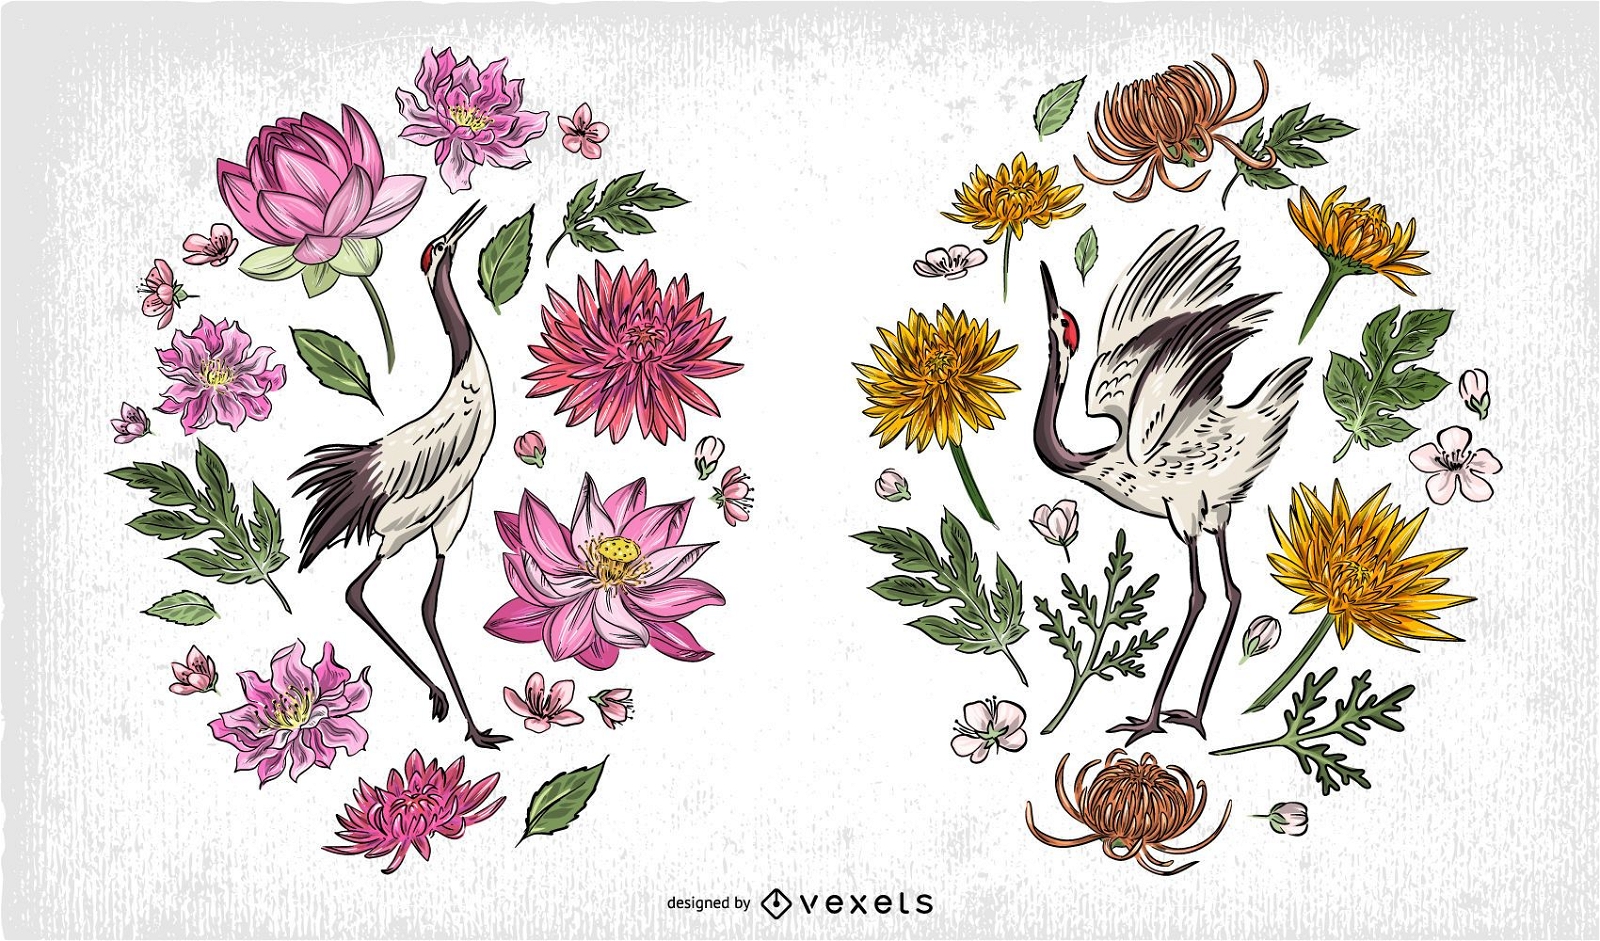 Composición de ilustración de aves chinas